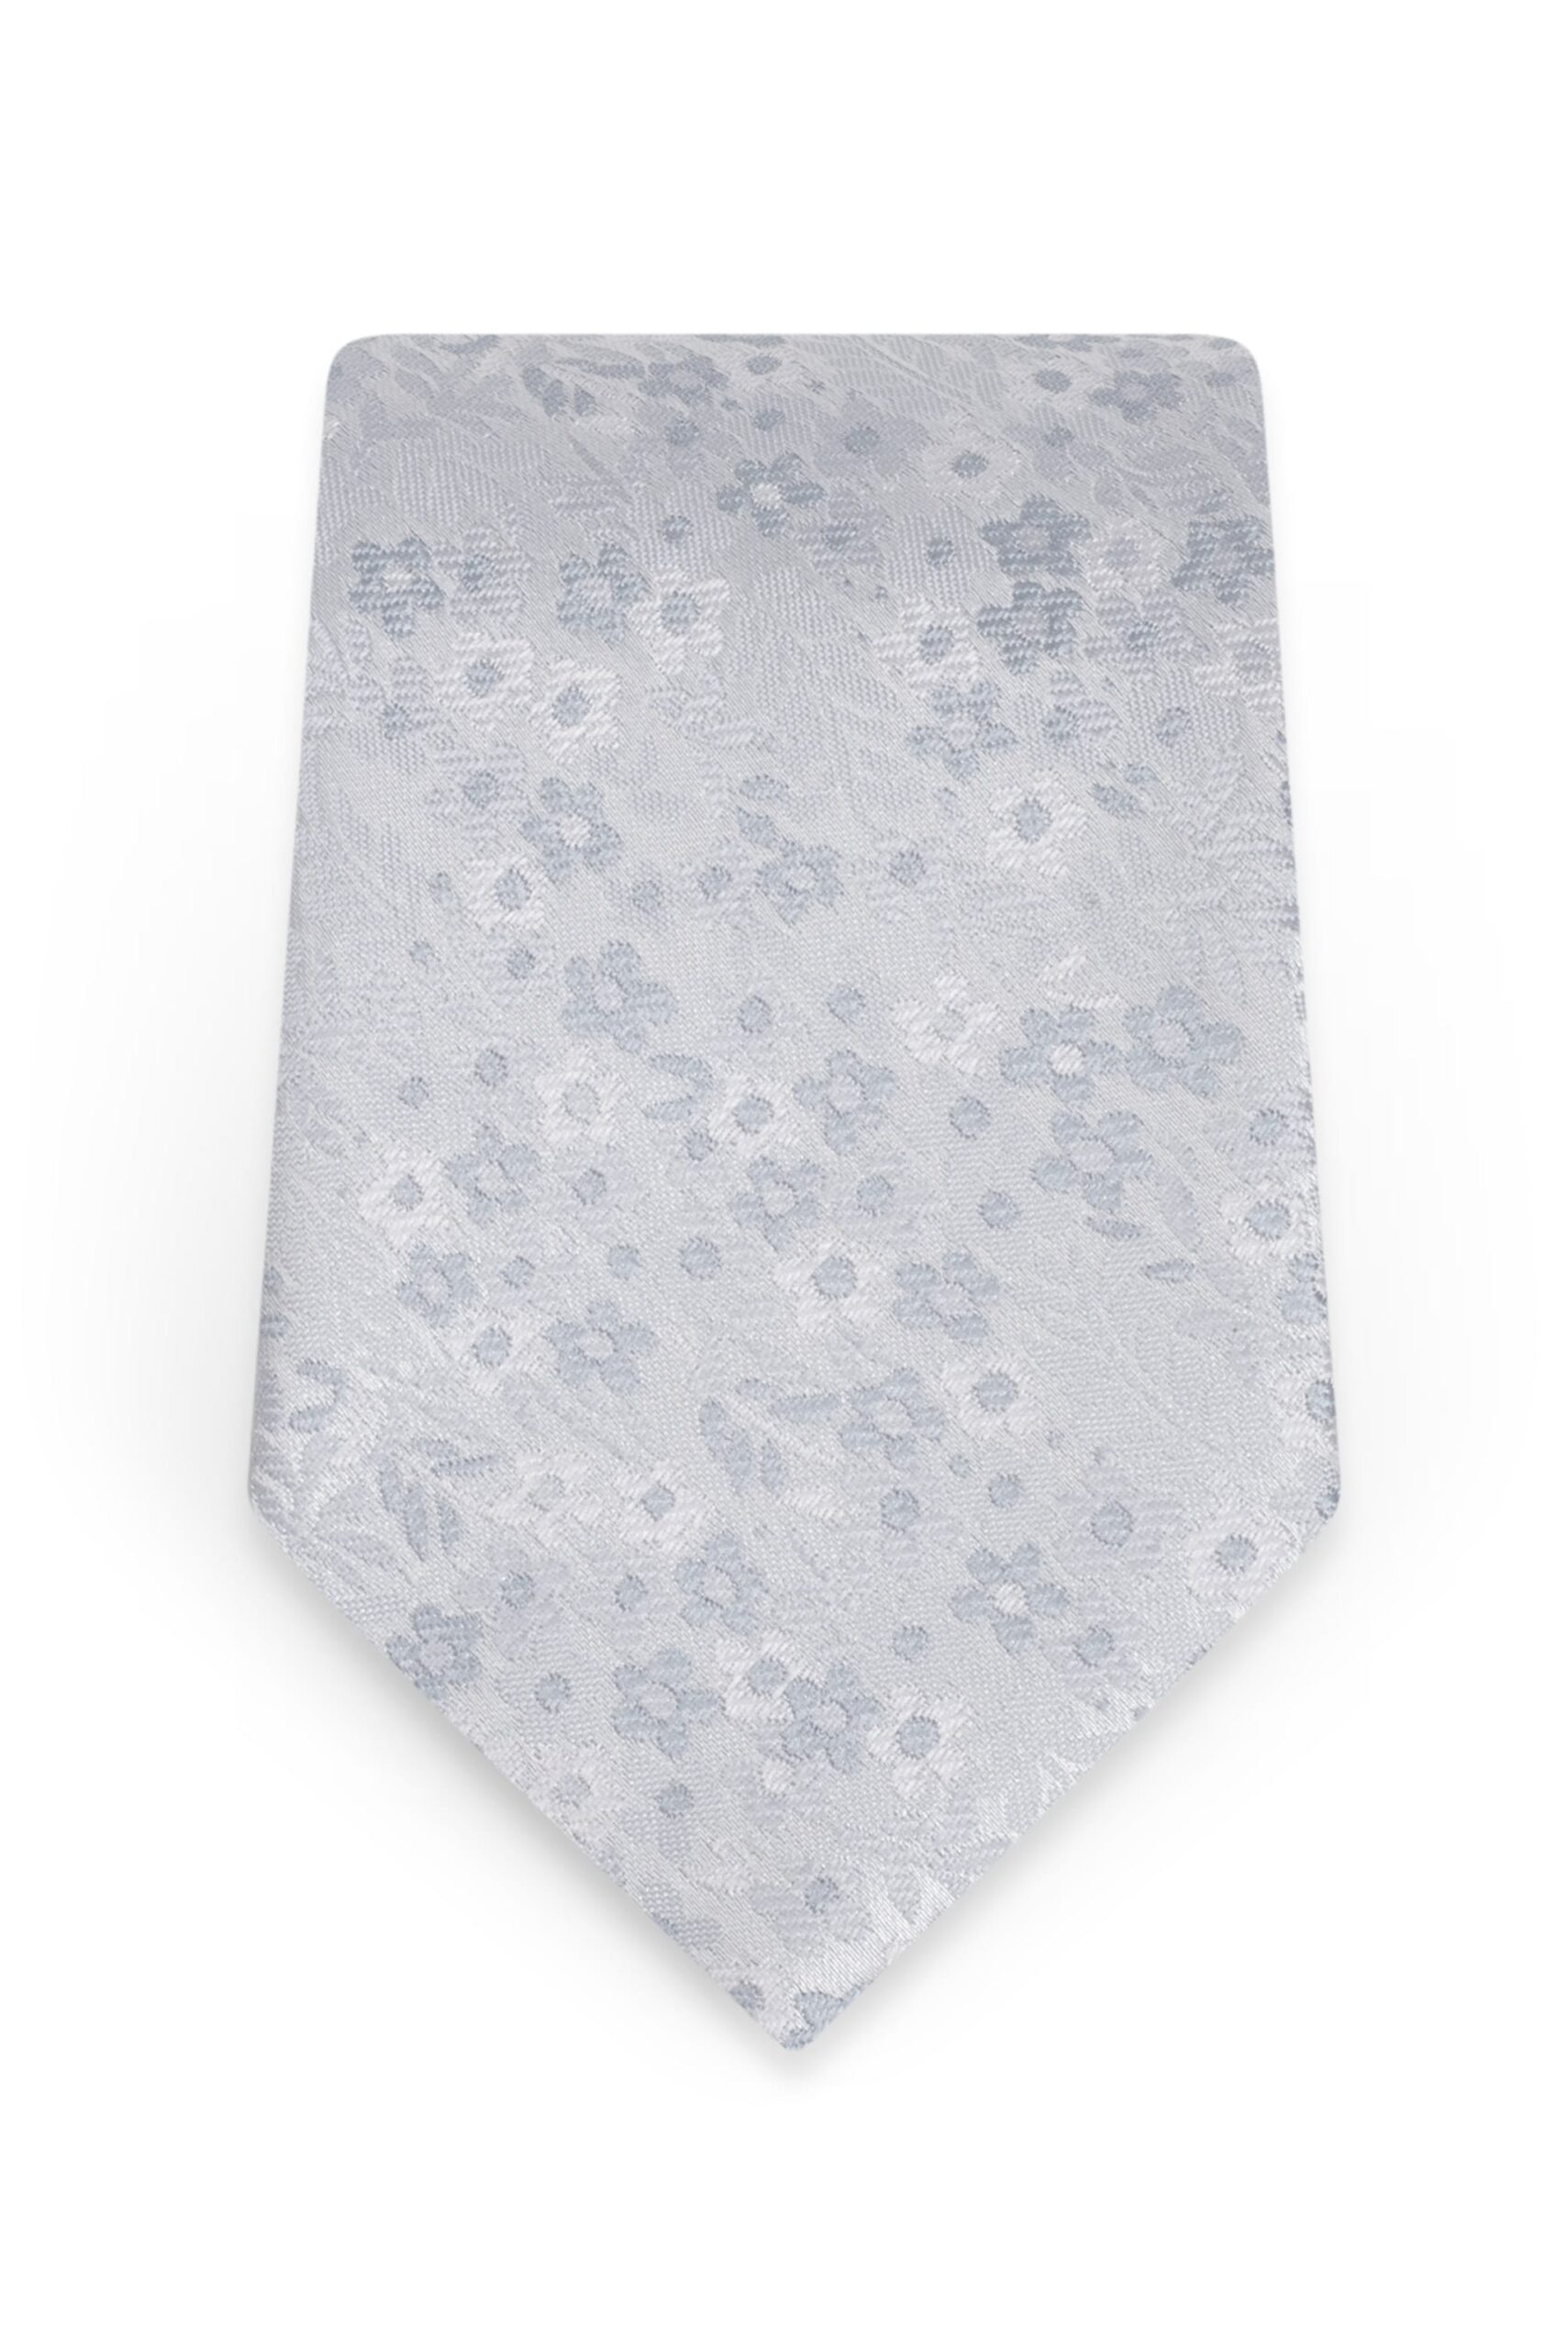 Floral Platinum Self-Tie Windsor Tie